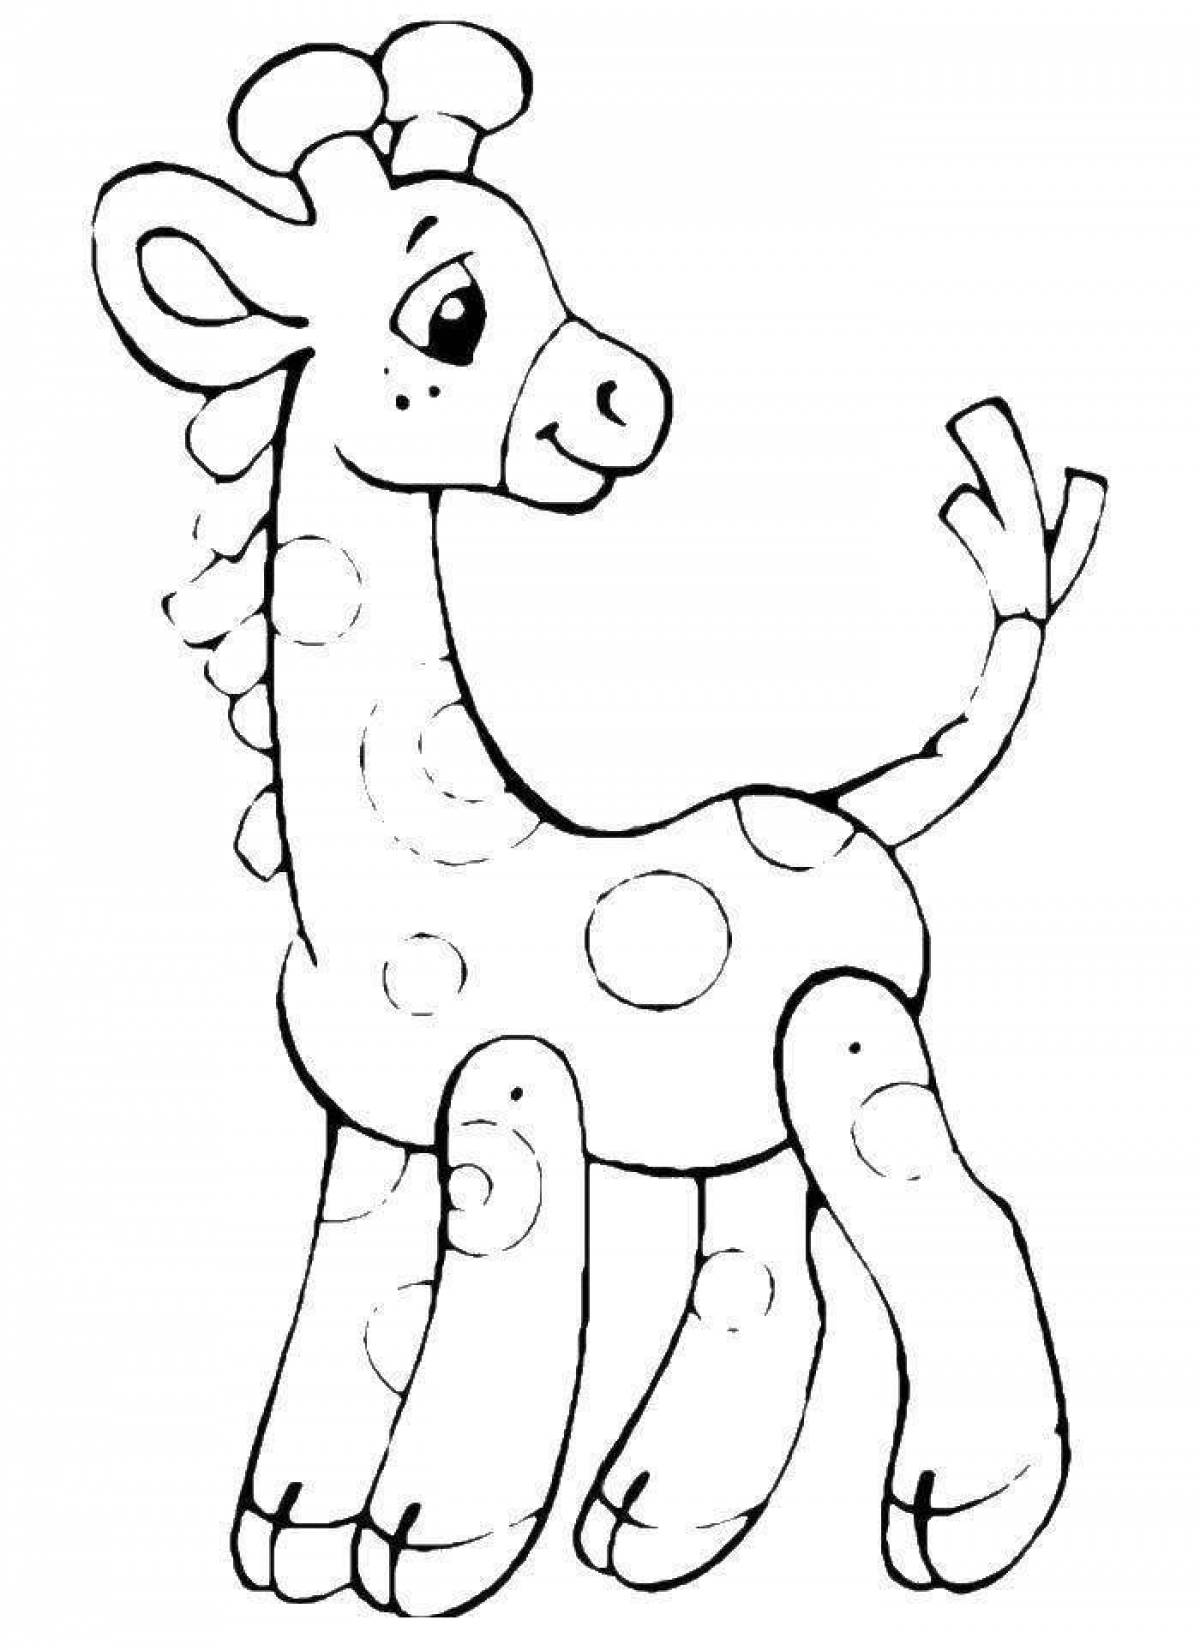 Joyful giraffe coloring for children 3-4 years old